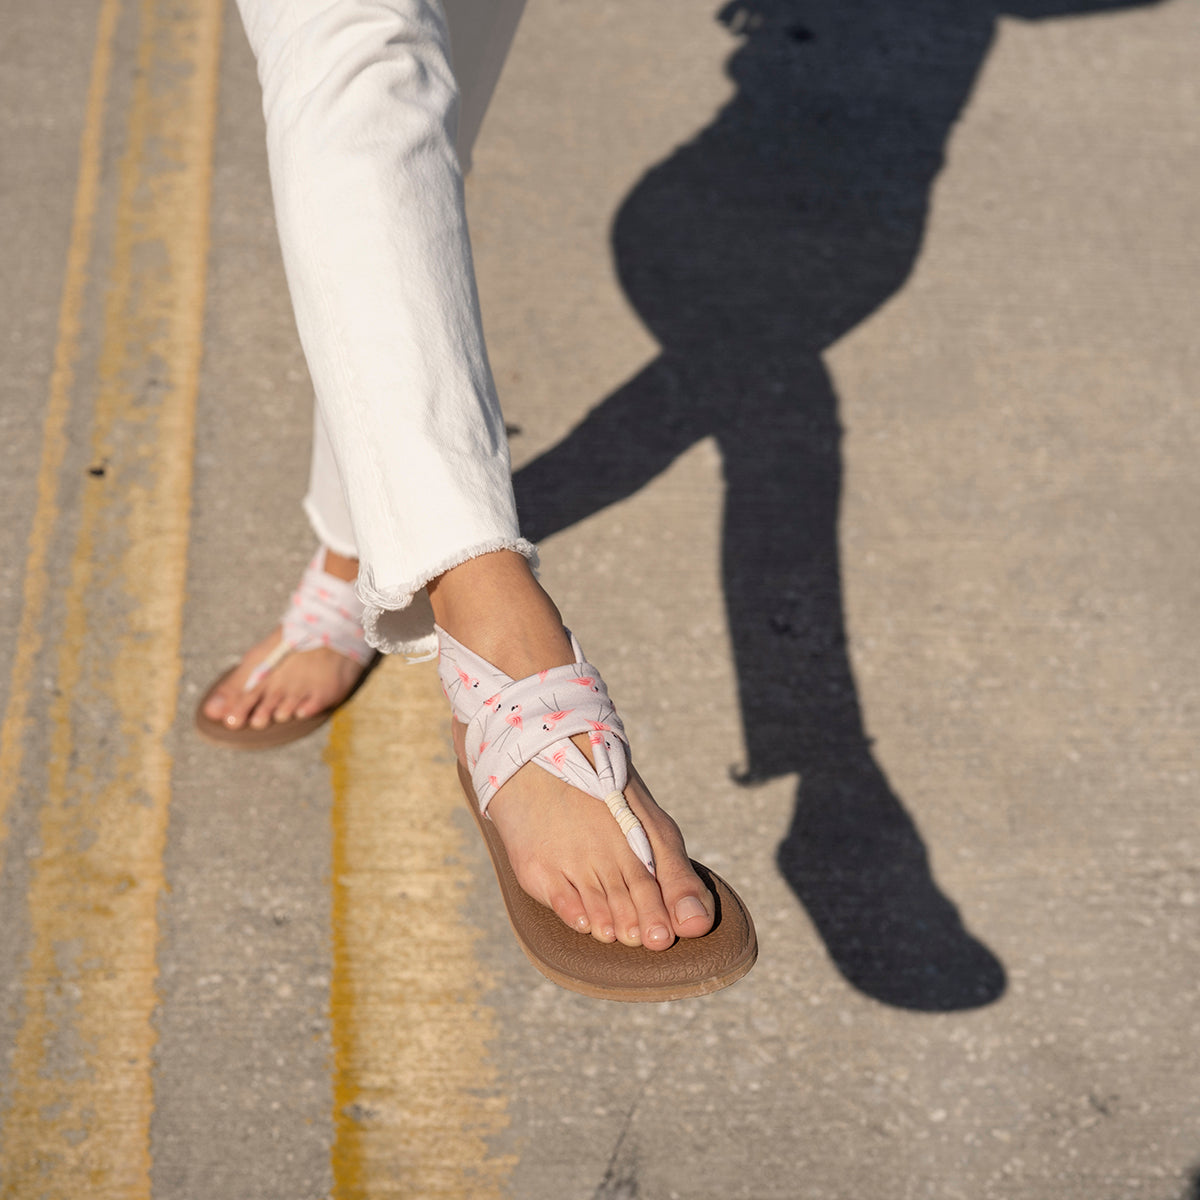 Shop Women's Sanuk Sandals up to 80% Off